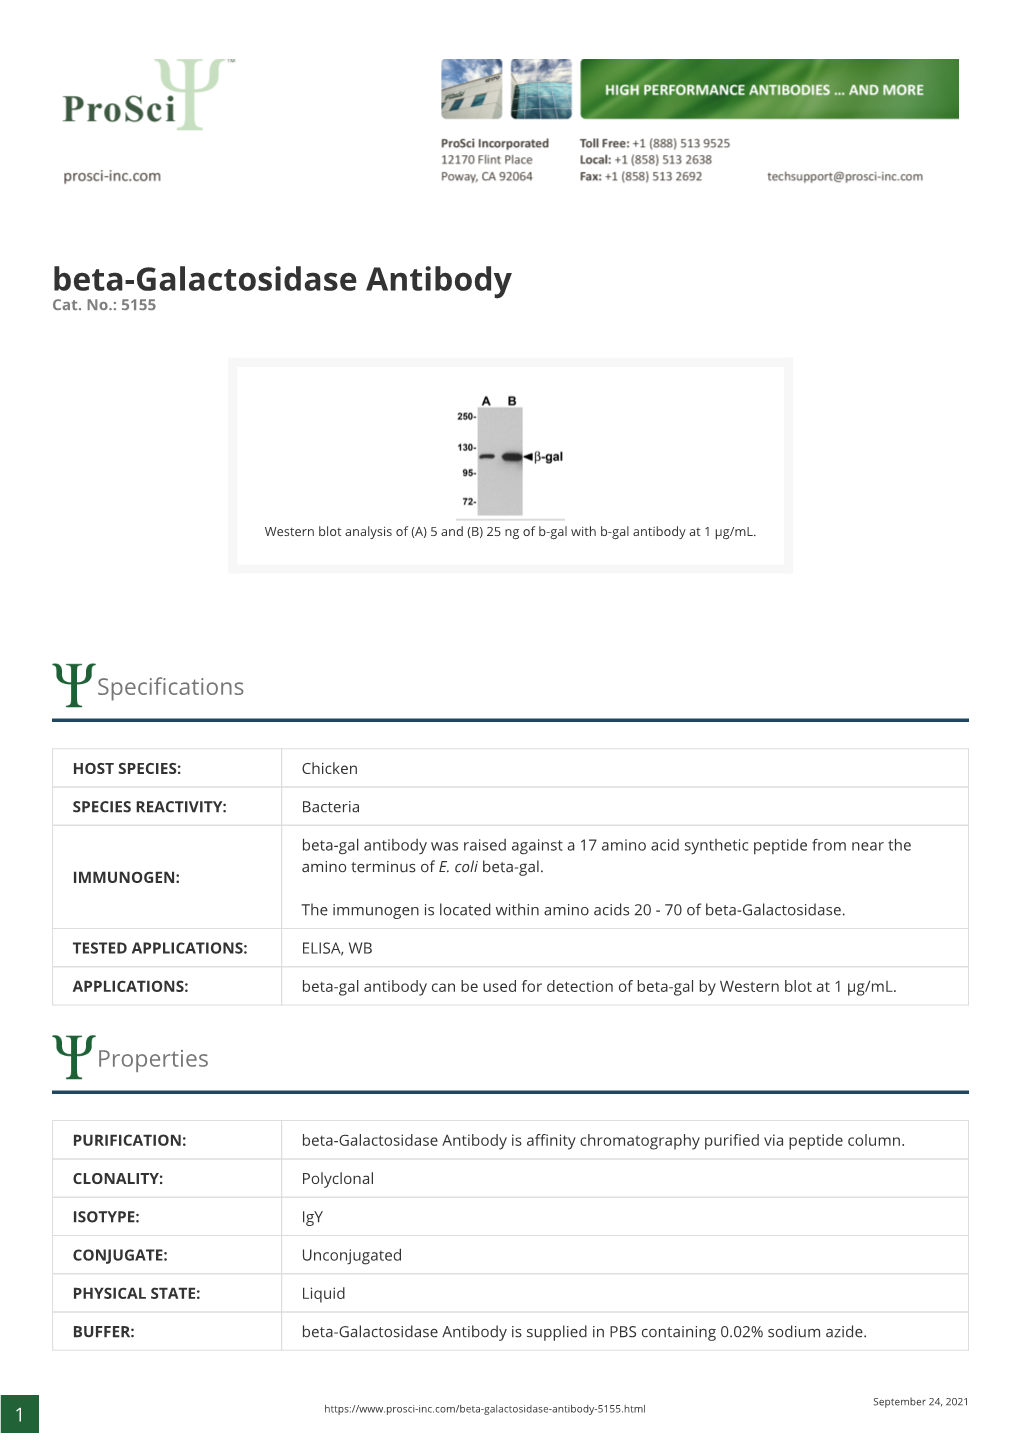 Beta-Galactosidase Antibody Cat